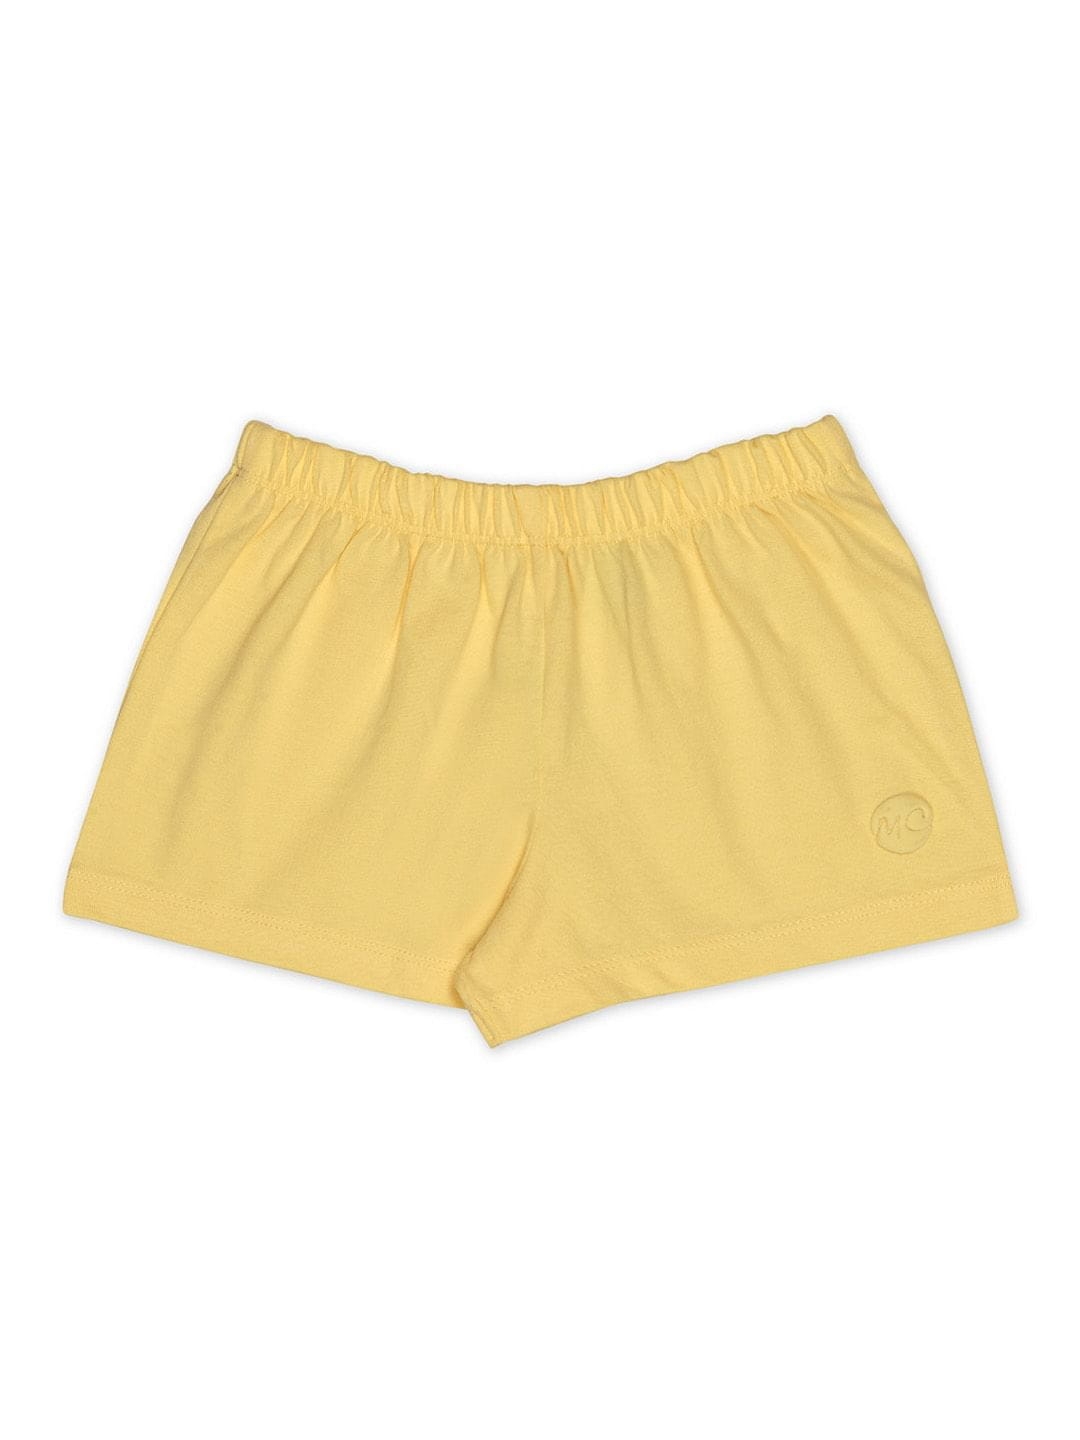 Mothercare | Girls Shorts - Yellow 0